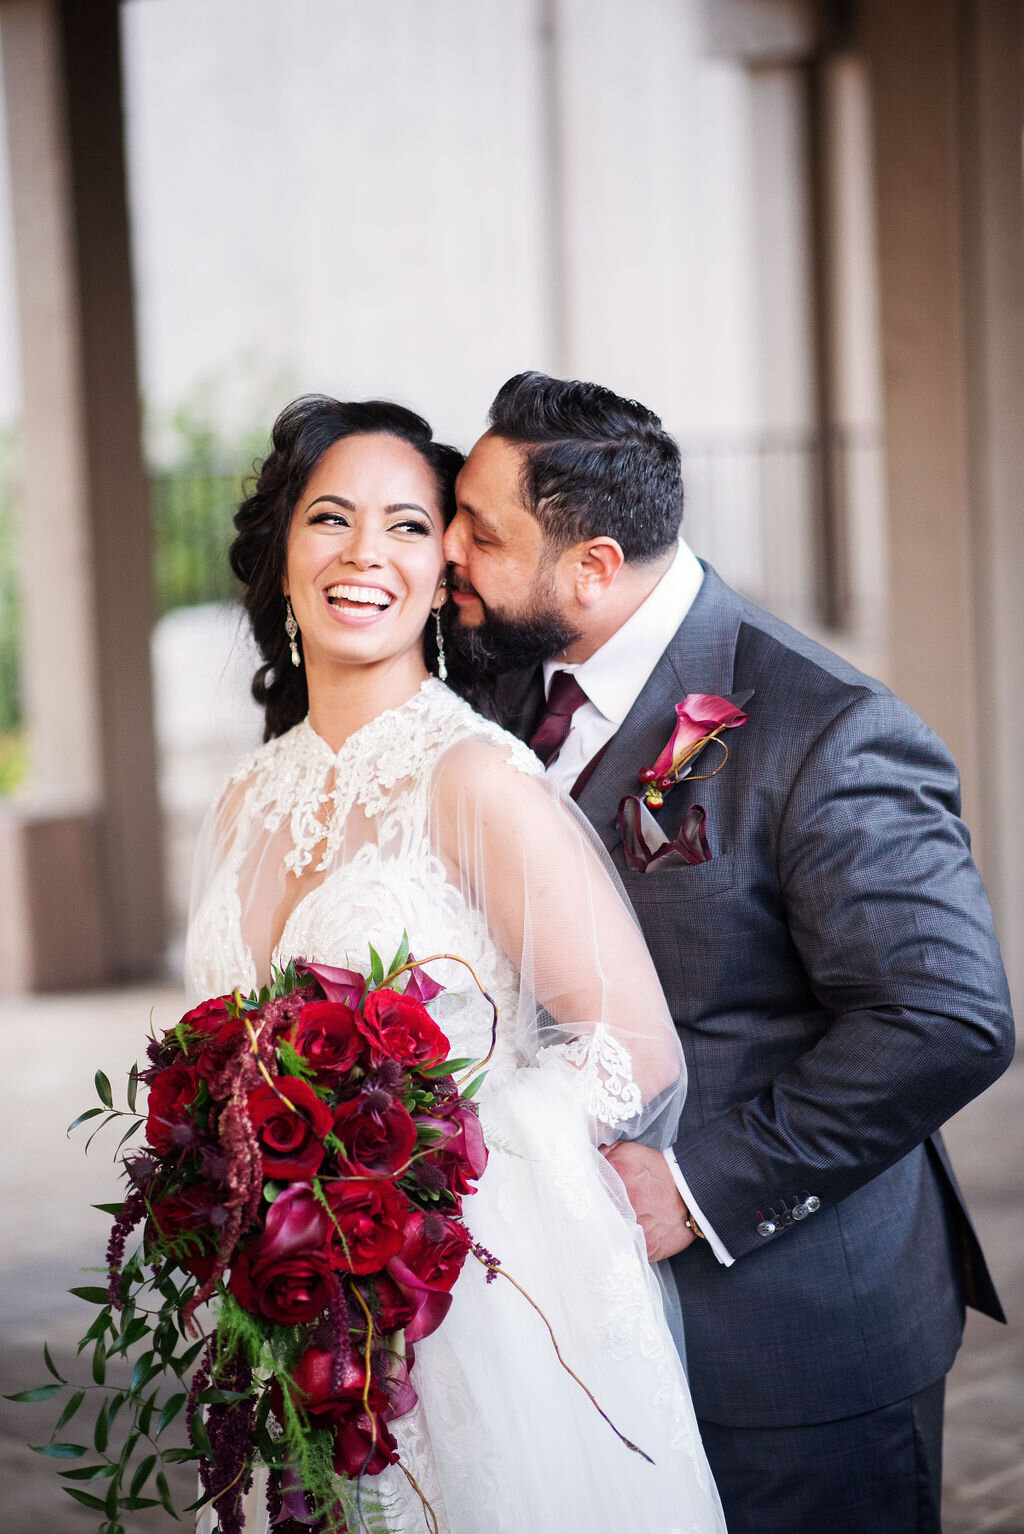  Rosie and Gabo wedding at Heritage Hotel. September 2, 2019 